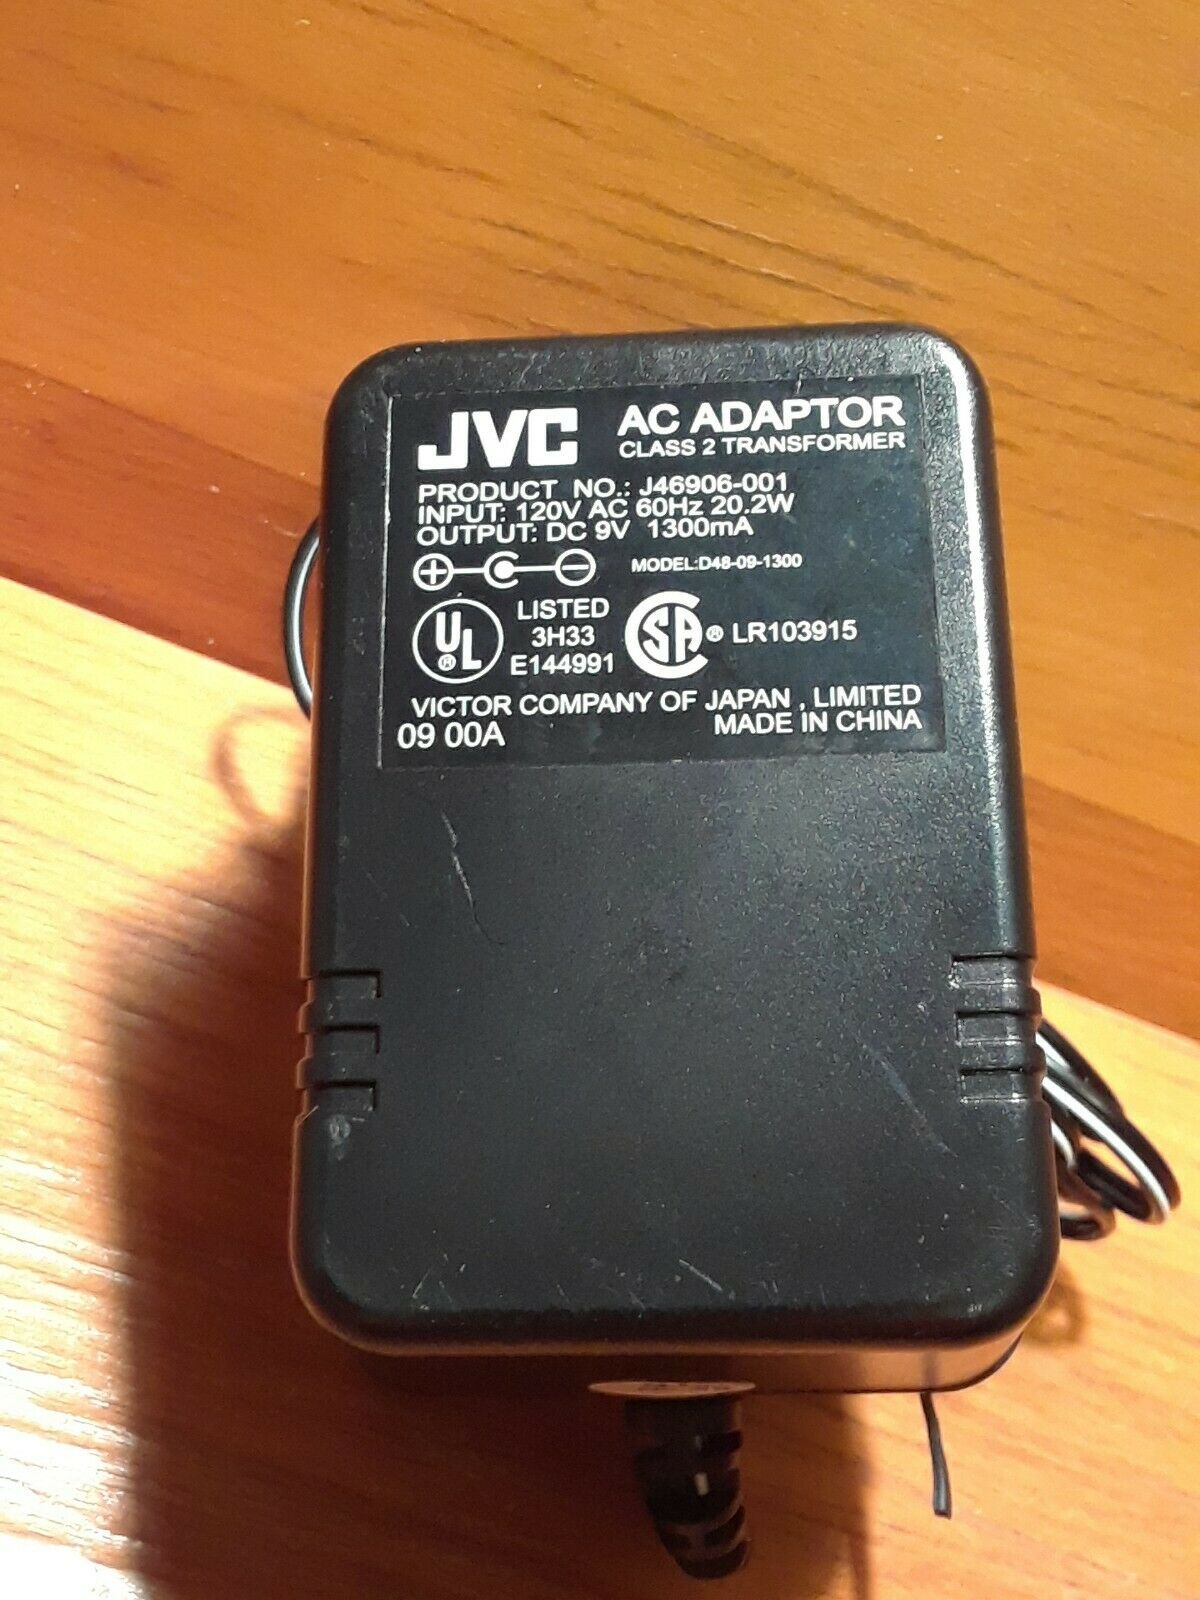 *Brand NEW*JVC J46906-001 Class 2 Transformer 9V 1300mA Ac Adapter